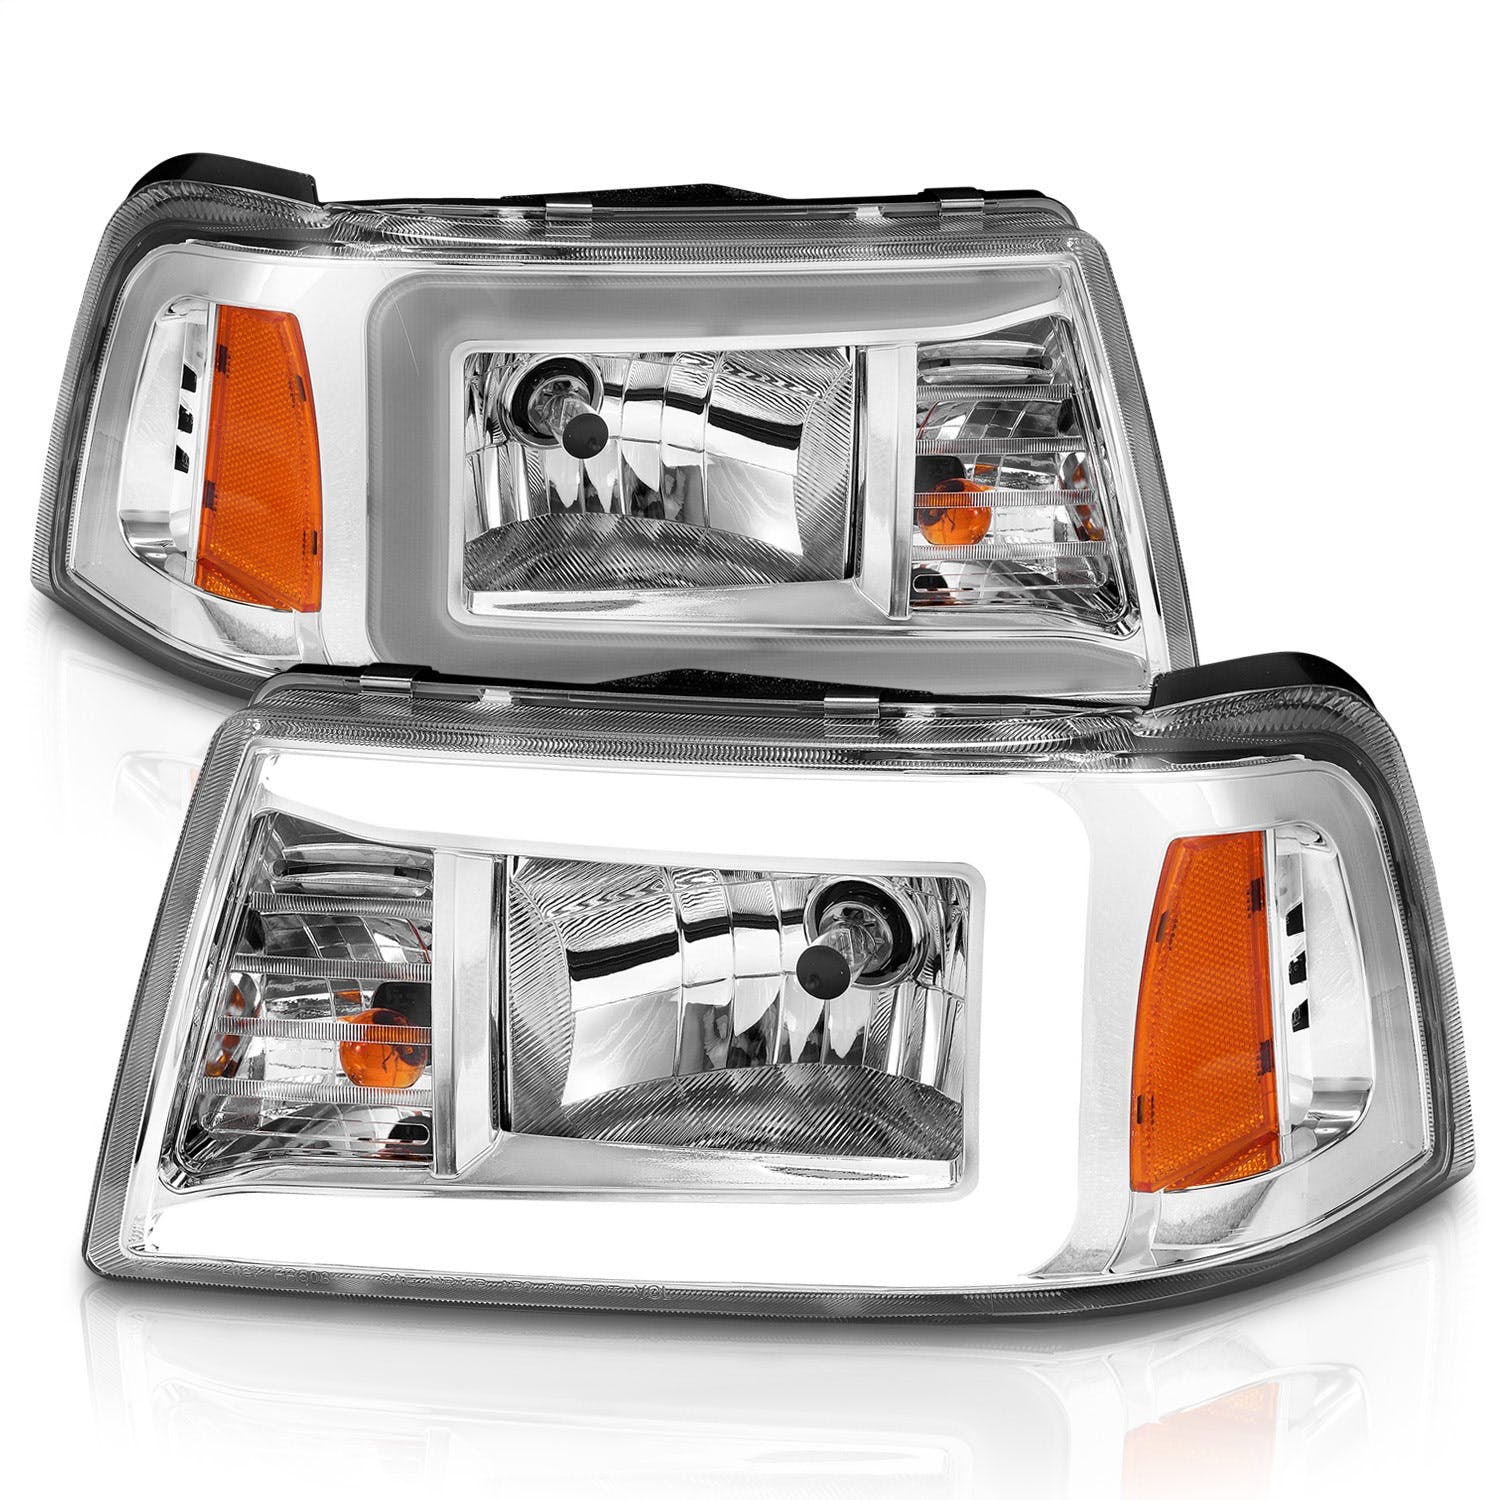 AnzoUSA 111512 Crystal Headlights with Light Bar Chrome Housing